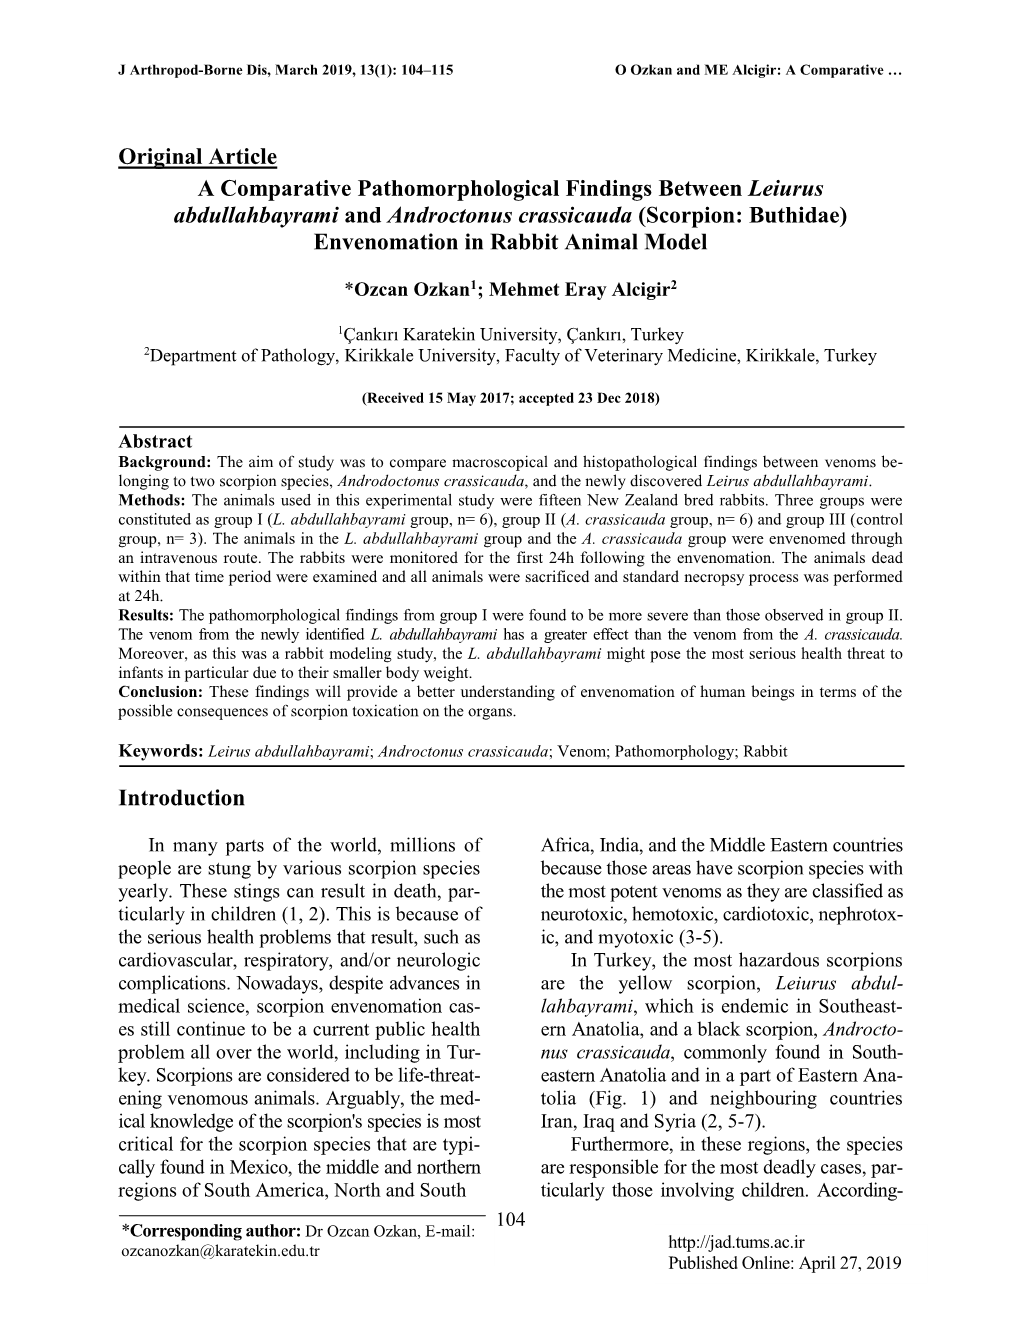 Original Article a Comparative Pathomorphological